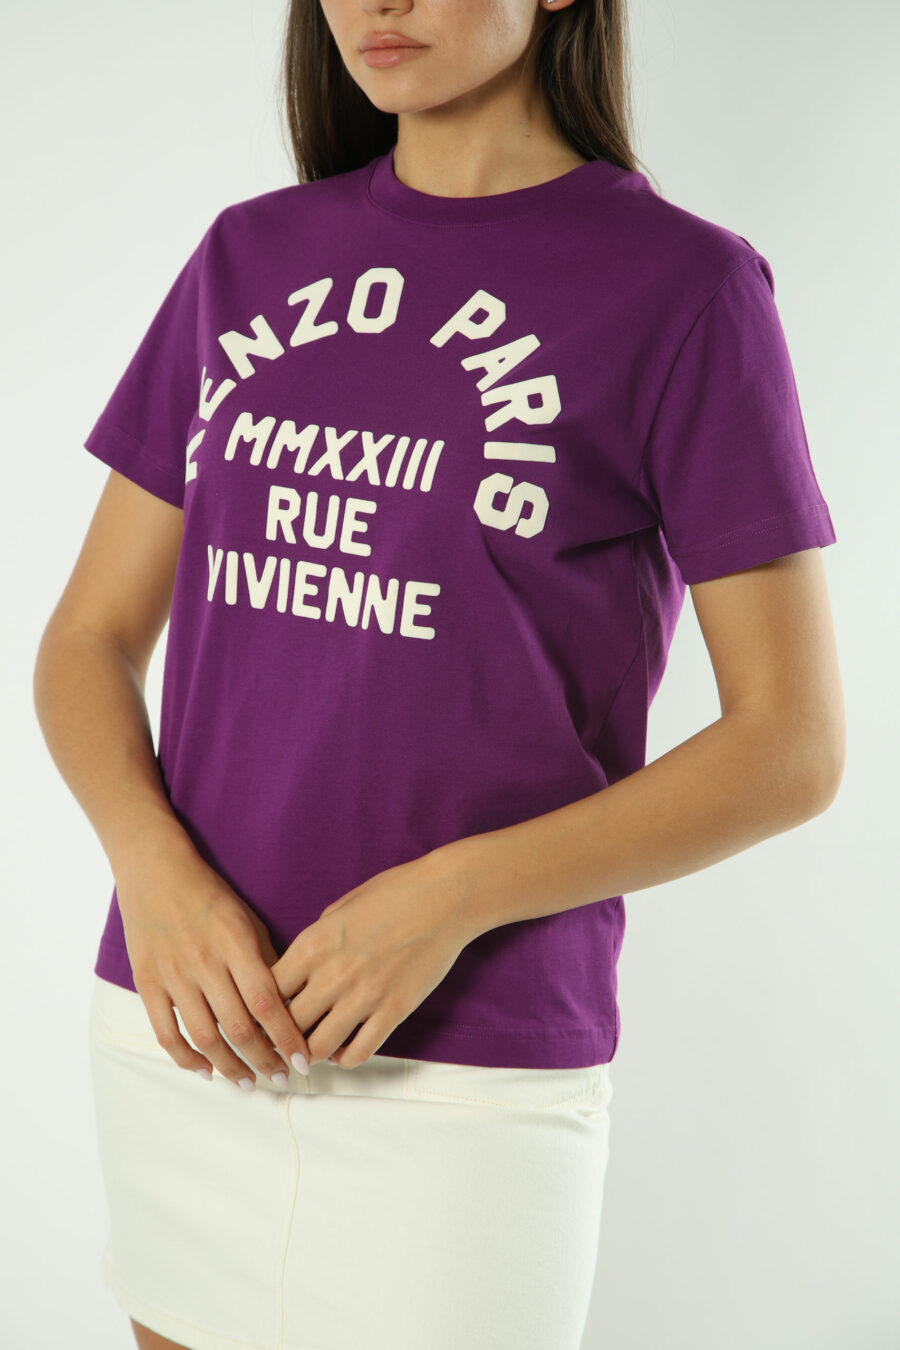 Camiseta violeta con maxilogo "rue vivienne" blanco - Photos 1355